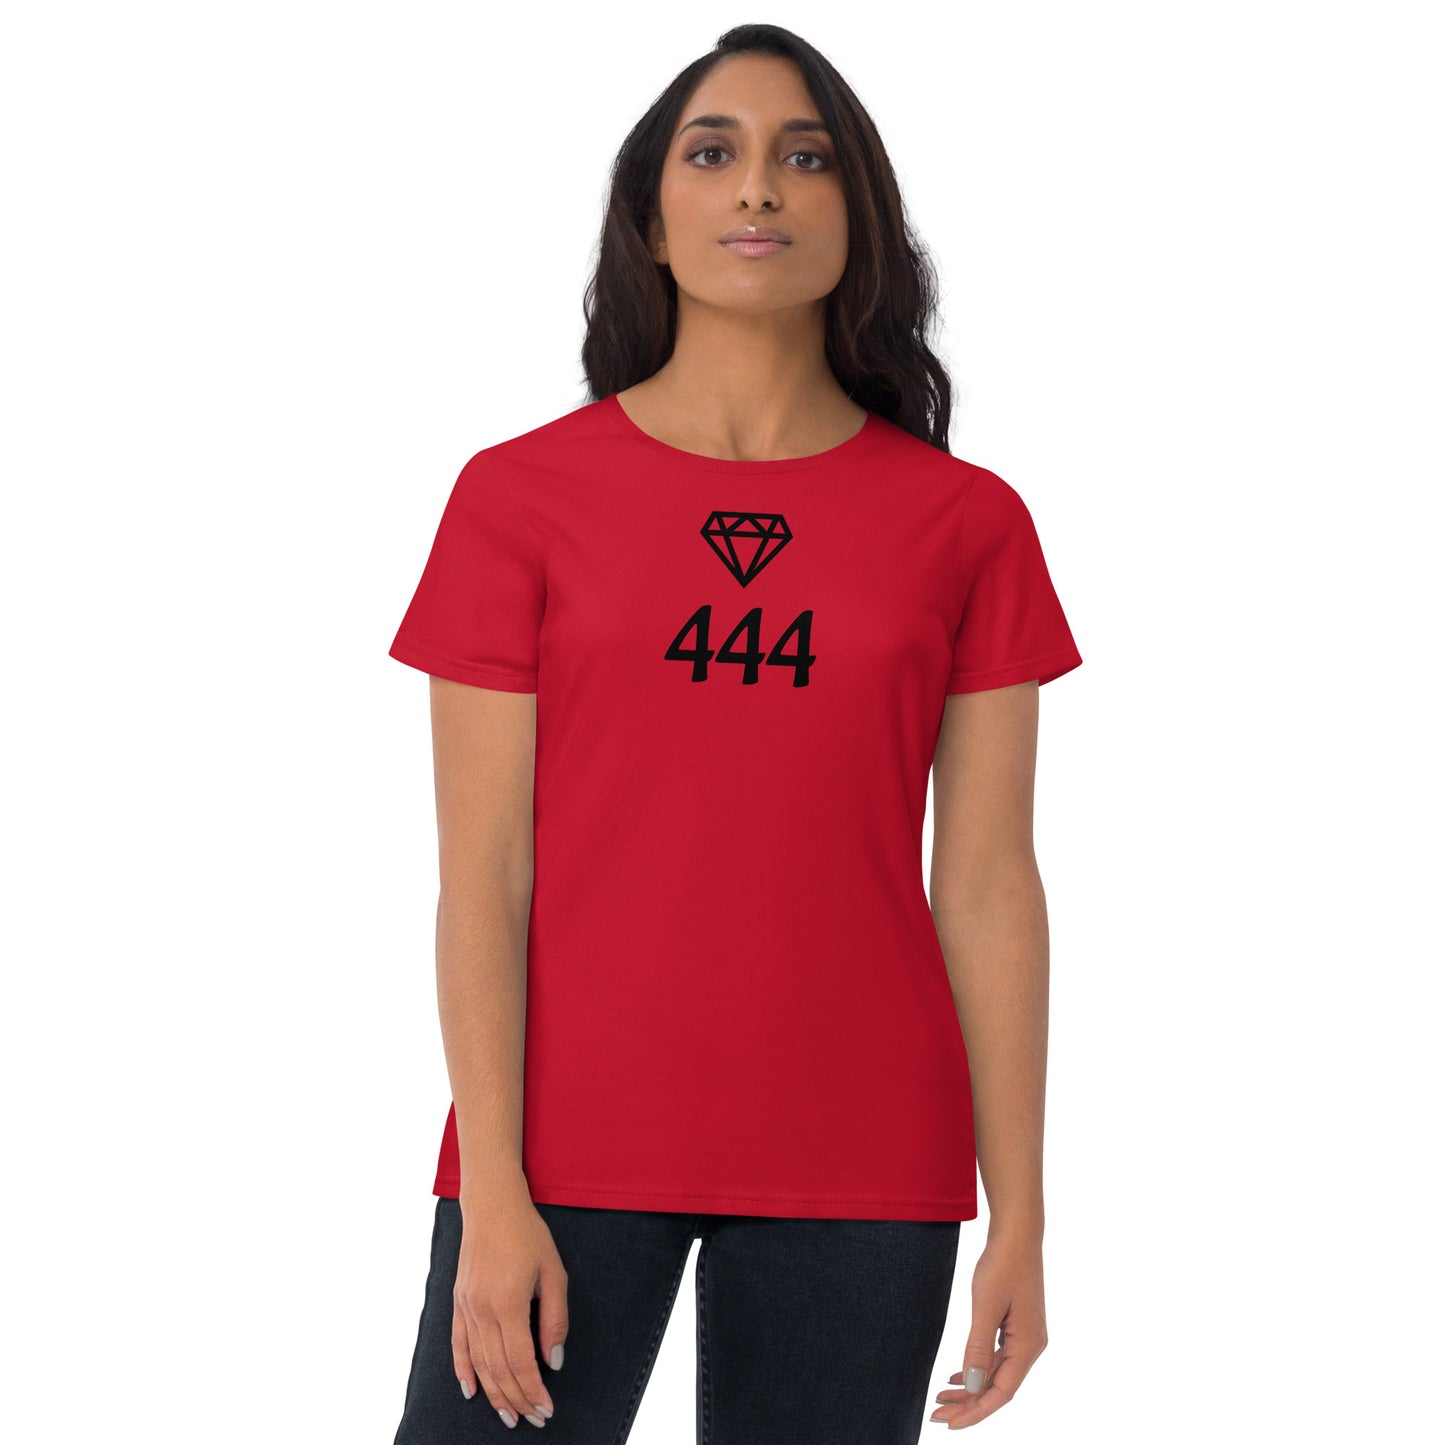 444 Women's t-shirt